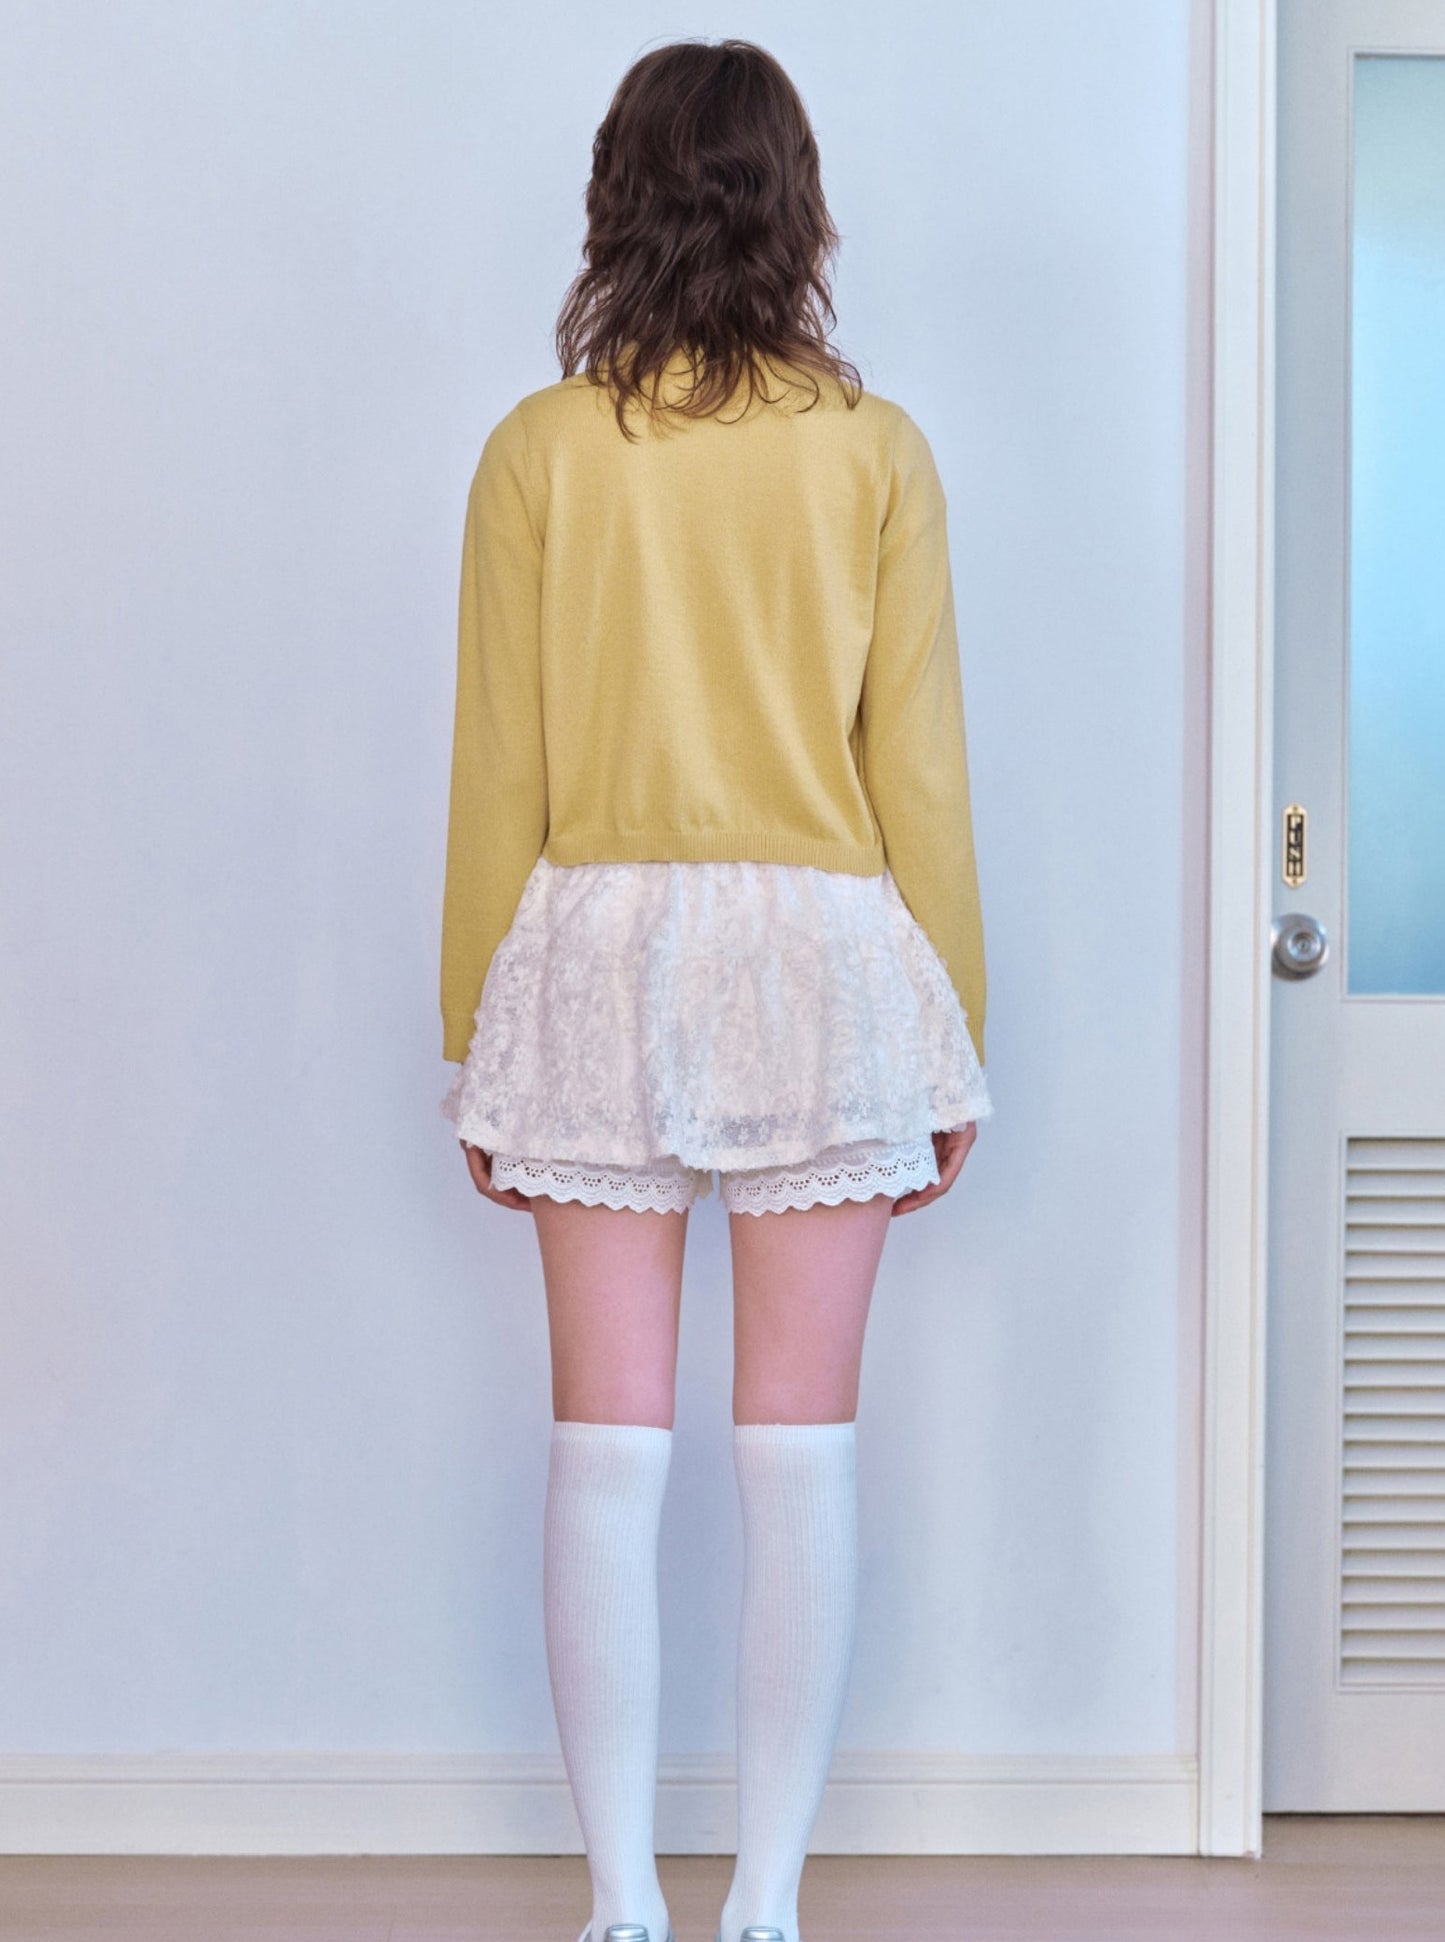 White Lace Short Pants Skirt